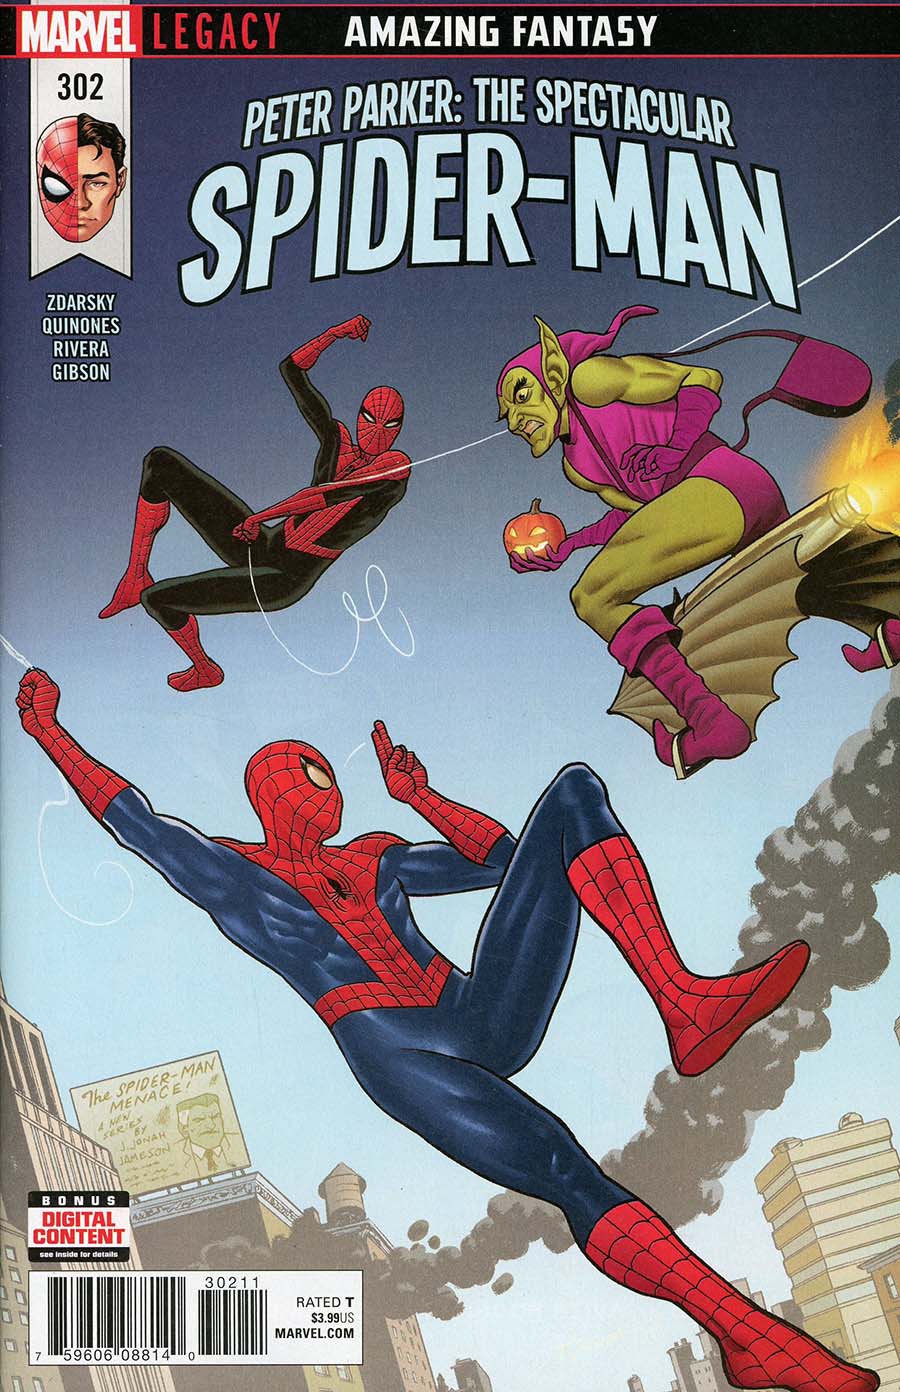 Peter Parker Spectacular Spider-Man #302 (Marvel Legacy Tie-In)